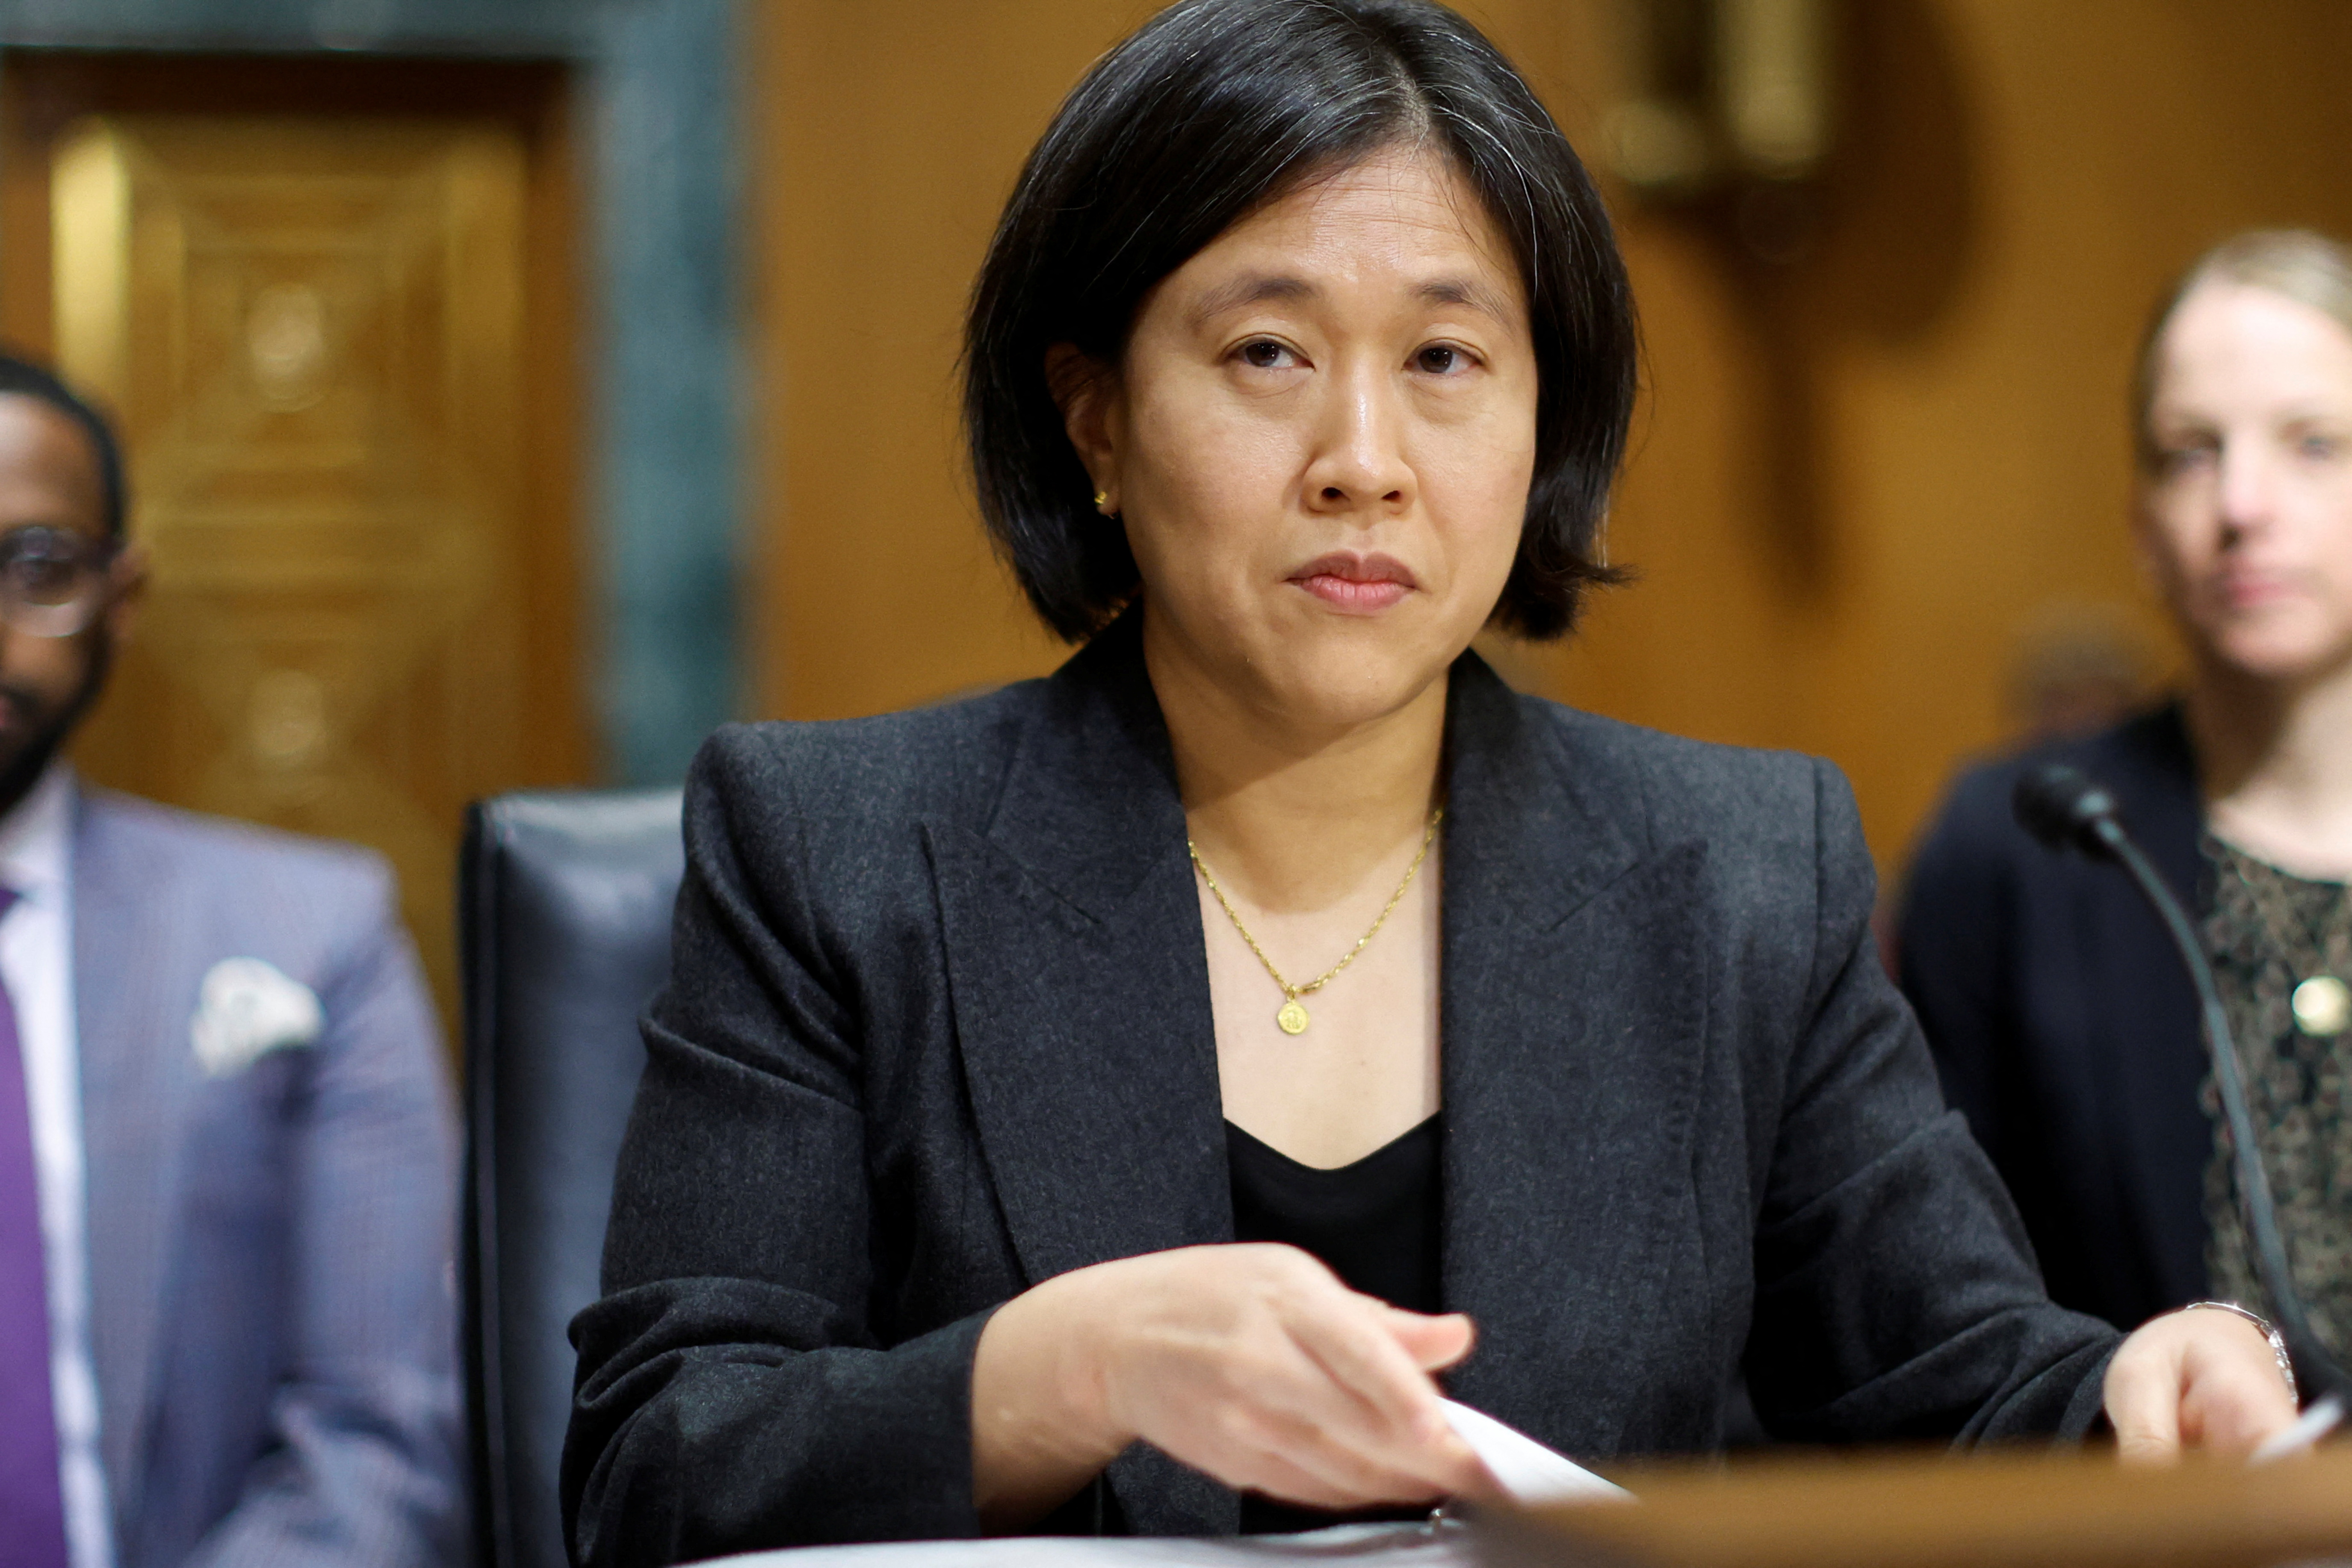 U.S. Trade Representative Katherine Tai testifies before a Senate Finance Committee hearing on President Biden's trade policy agenda on Capitol Hill in Washington